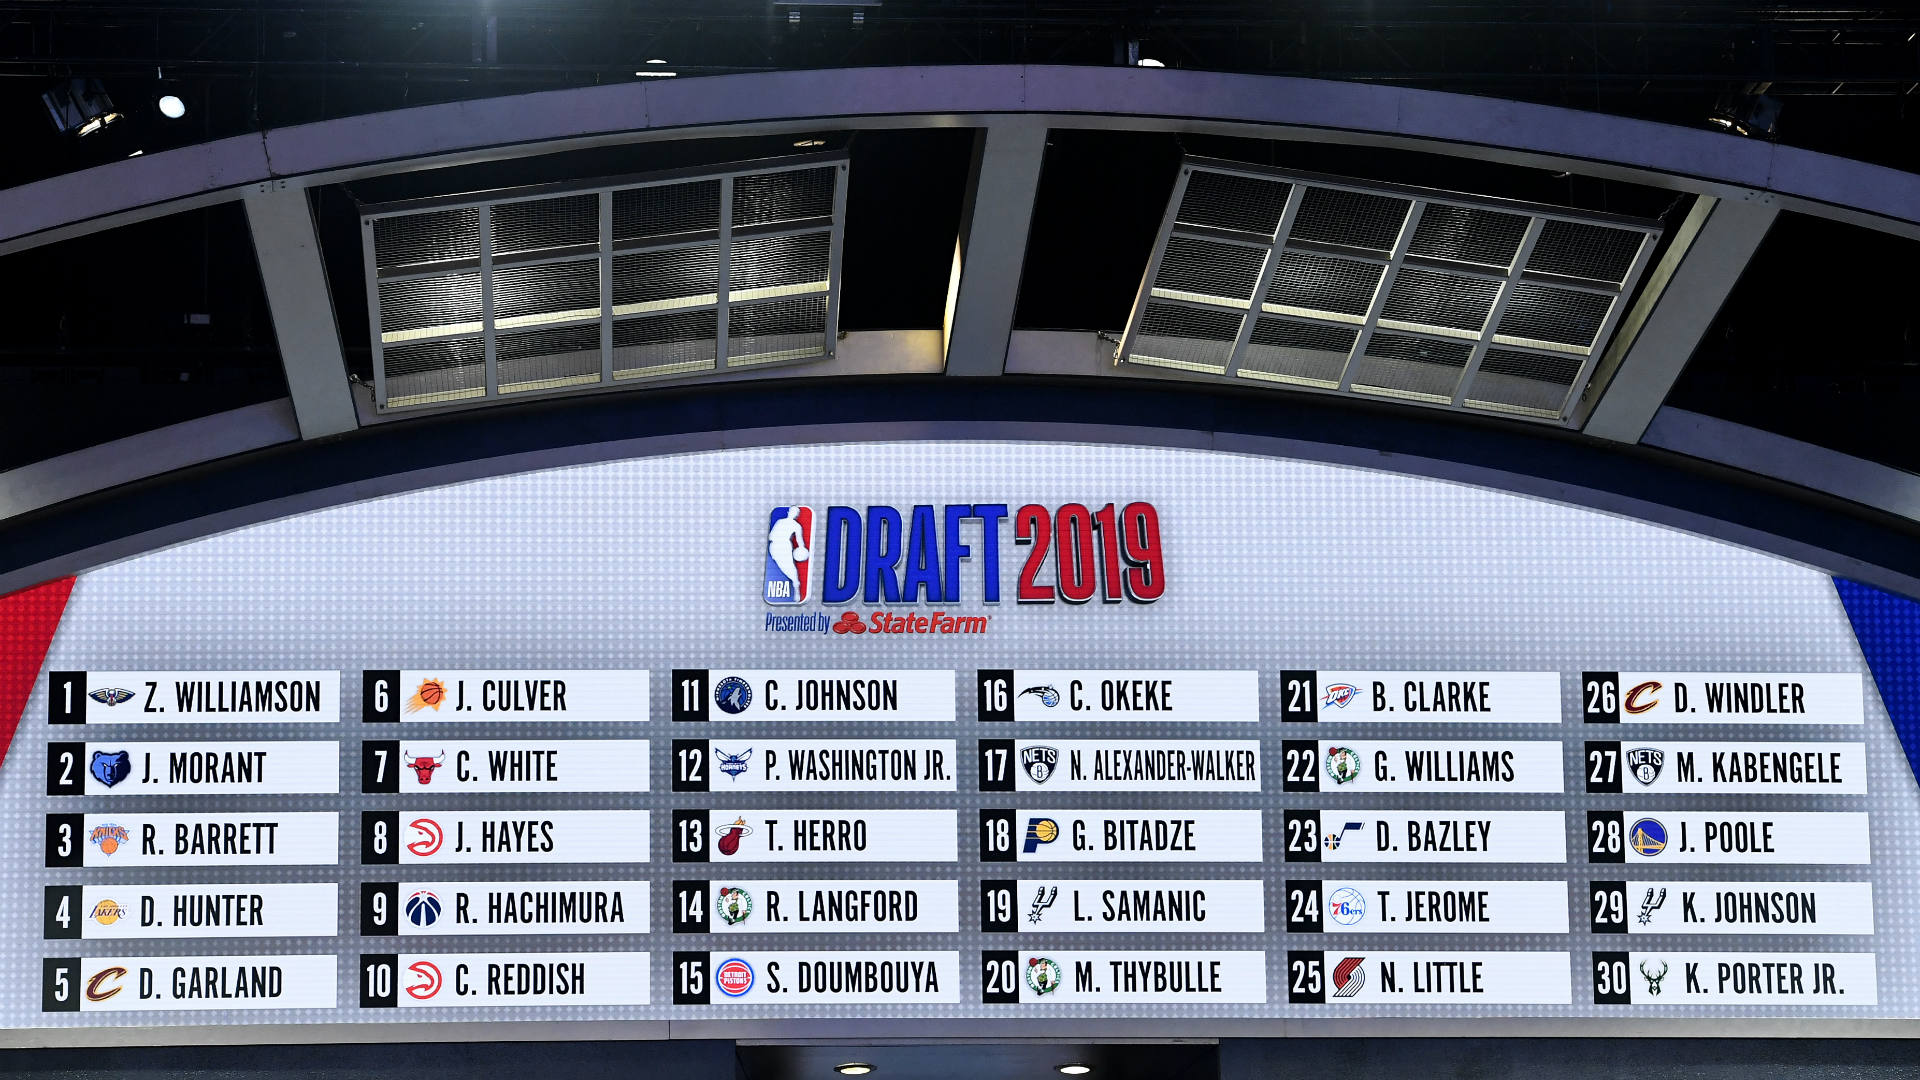 NBA Draft picks by team Full draft results for all 30 franchises in